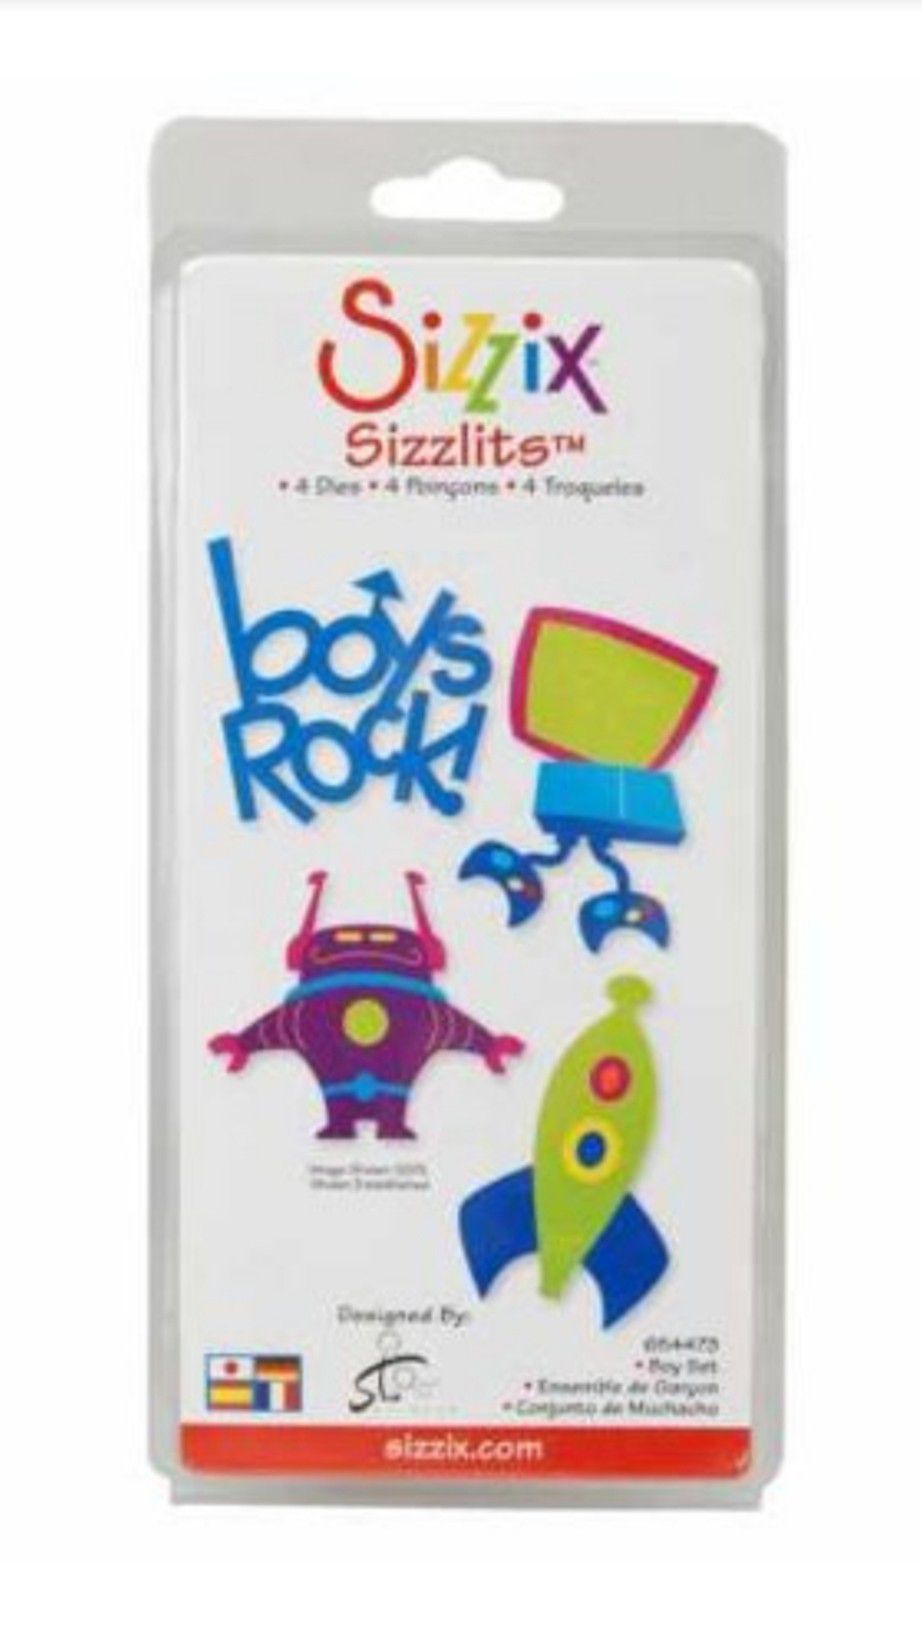 Sizzix Sizzlits Boys Rock Robot Rocket Video Game Word Phrase